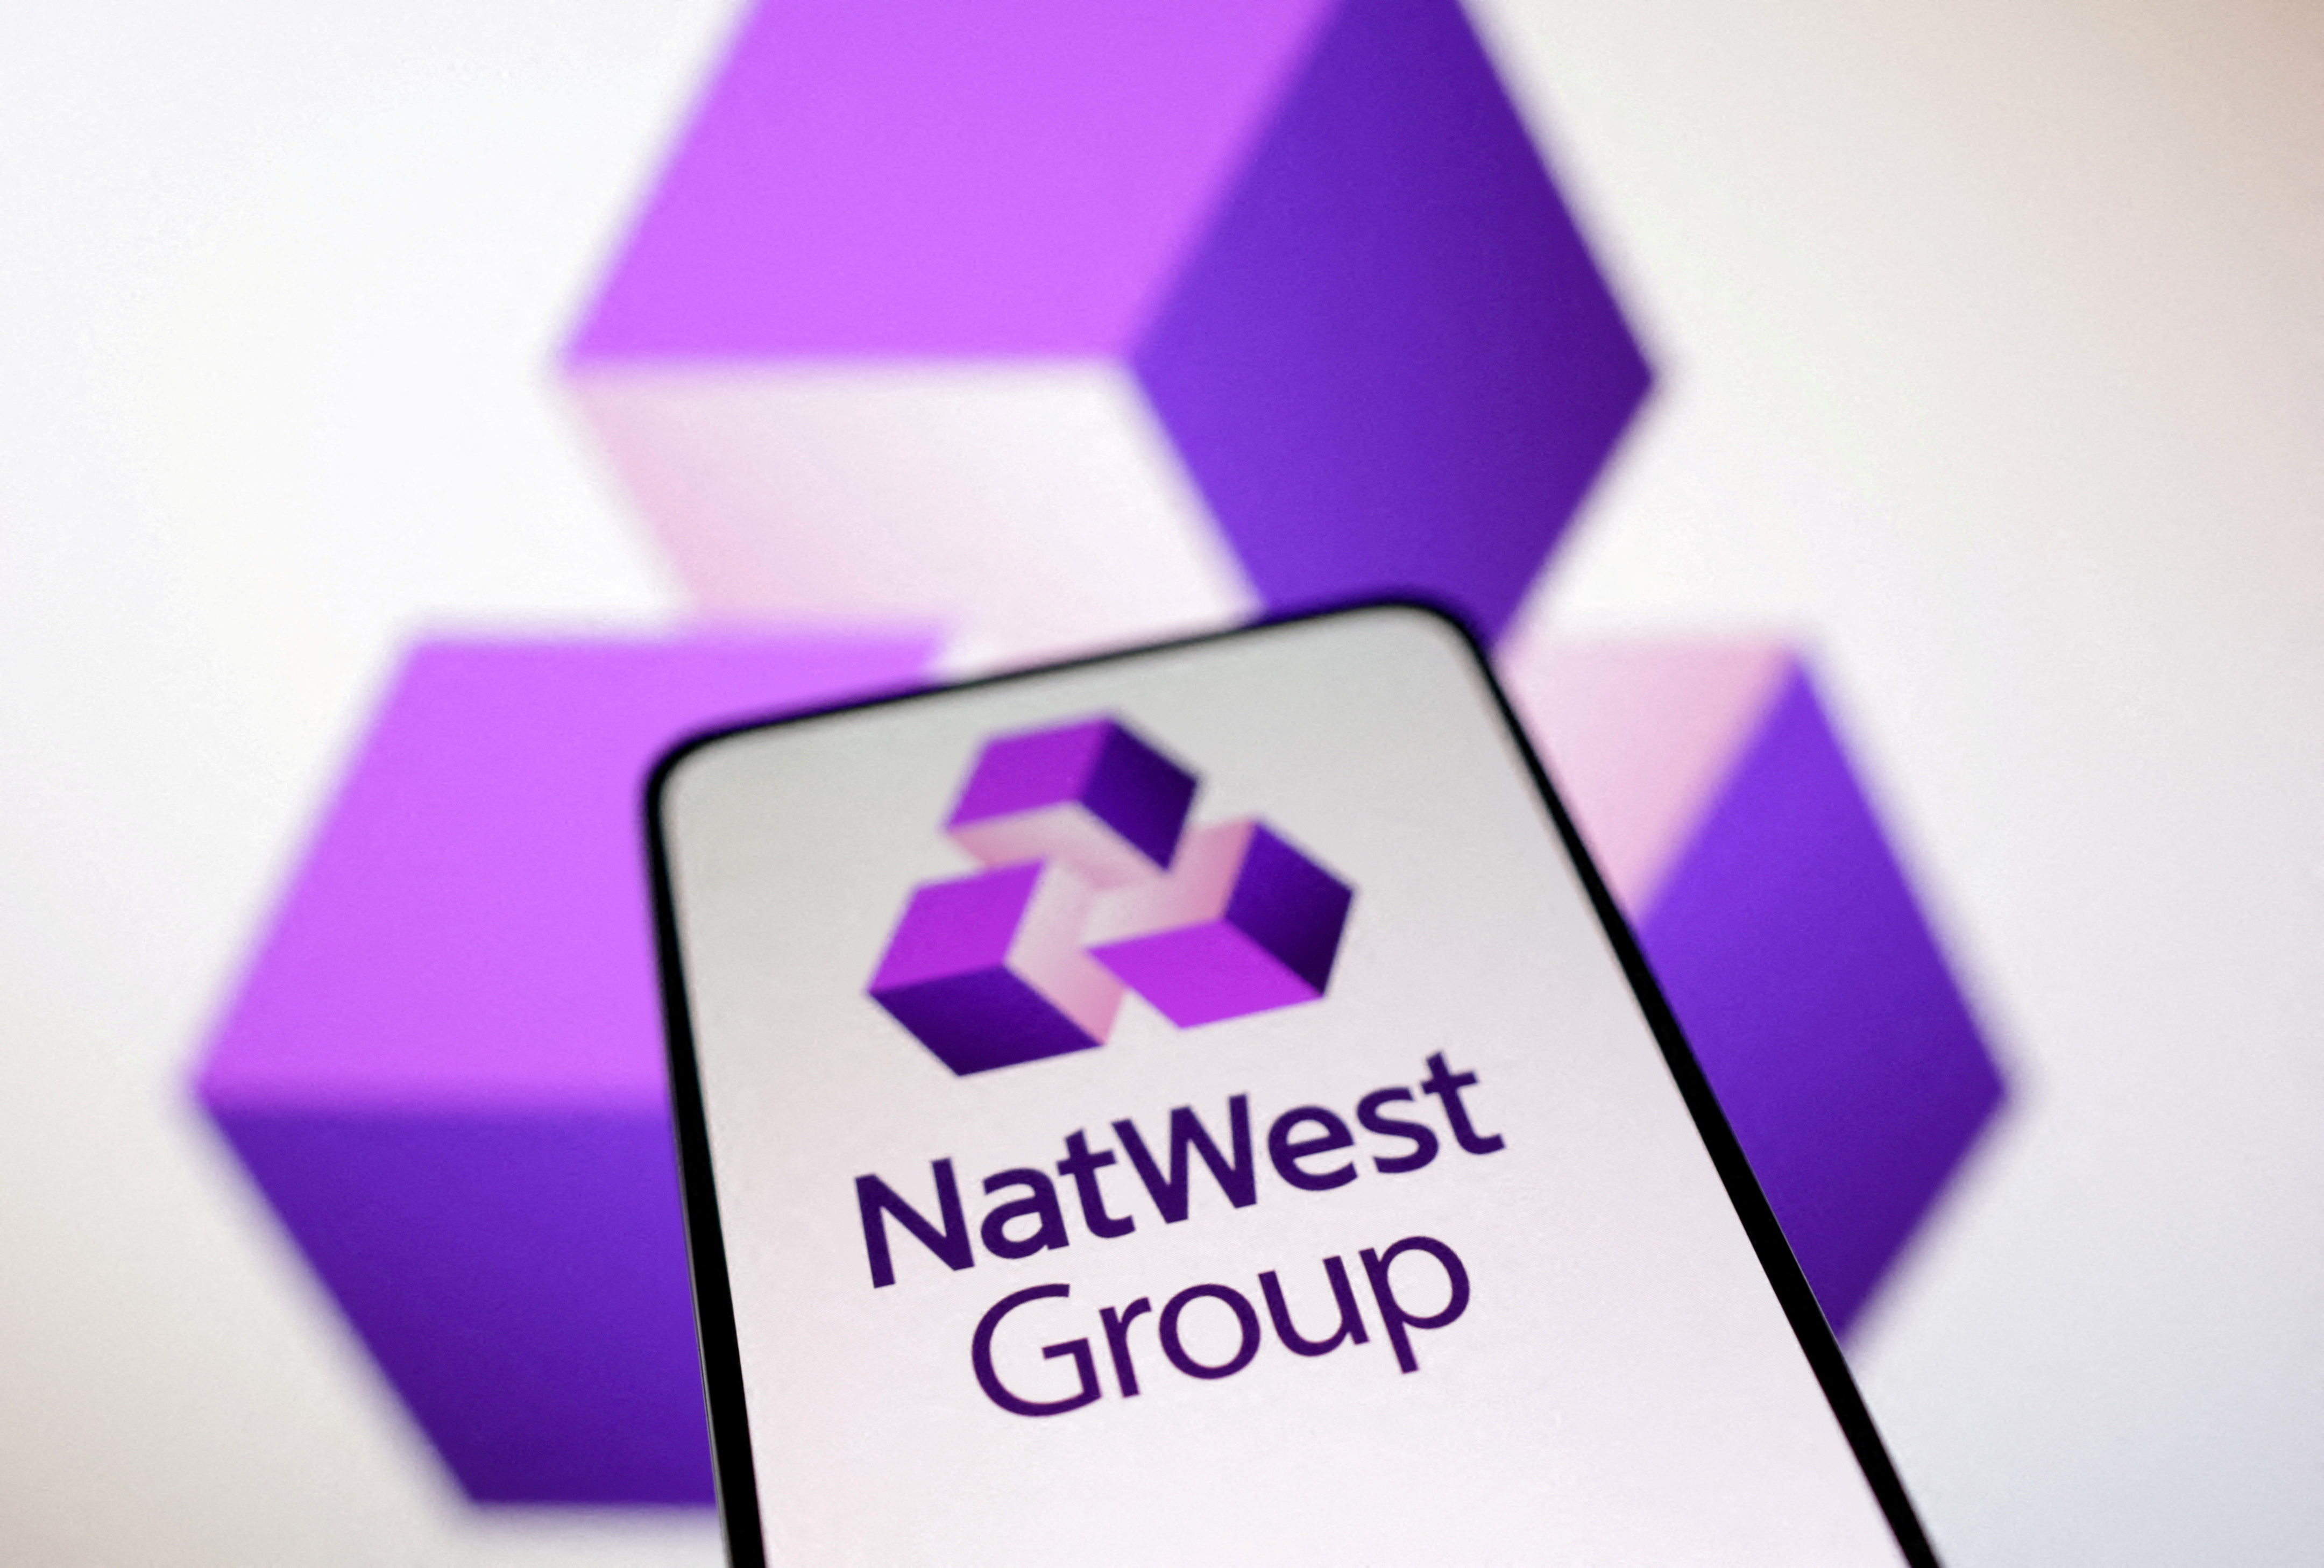 Illustration shows NatWest Group logo